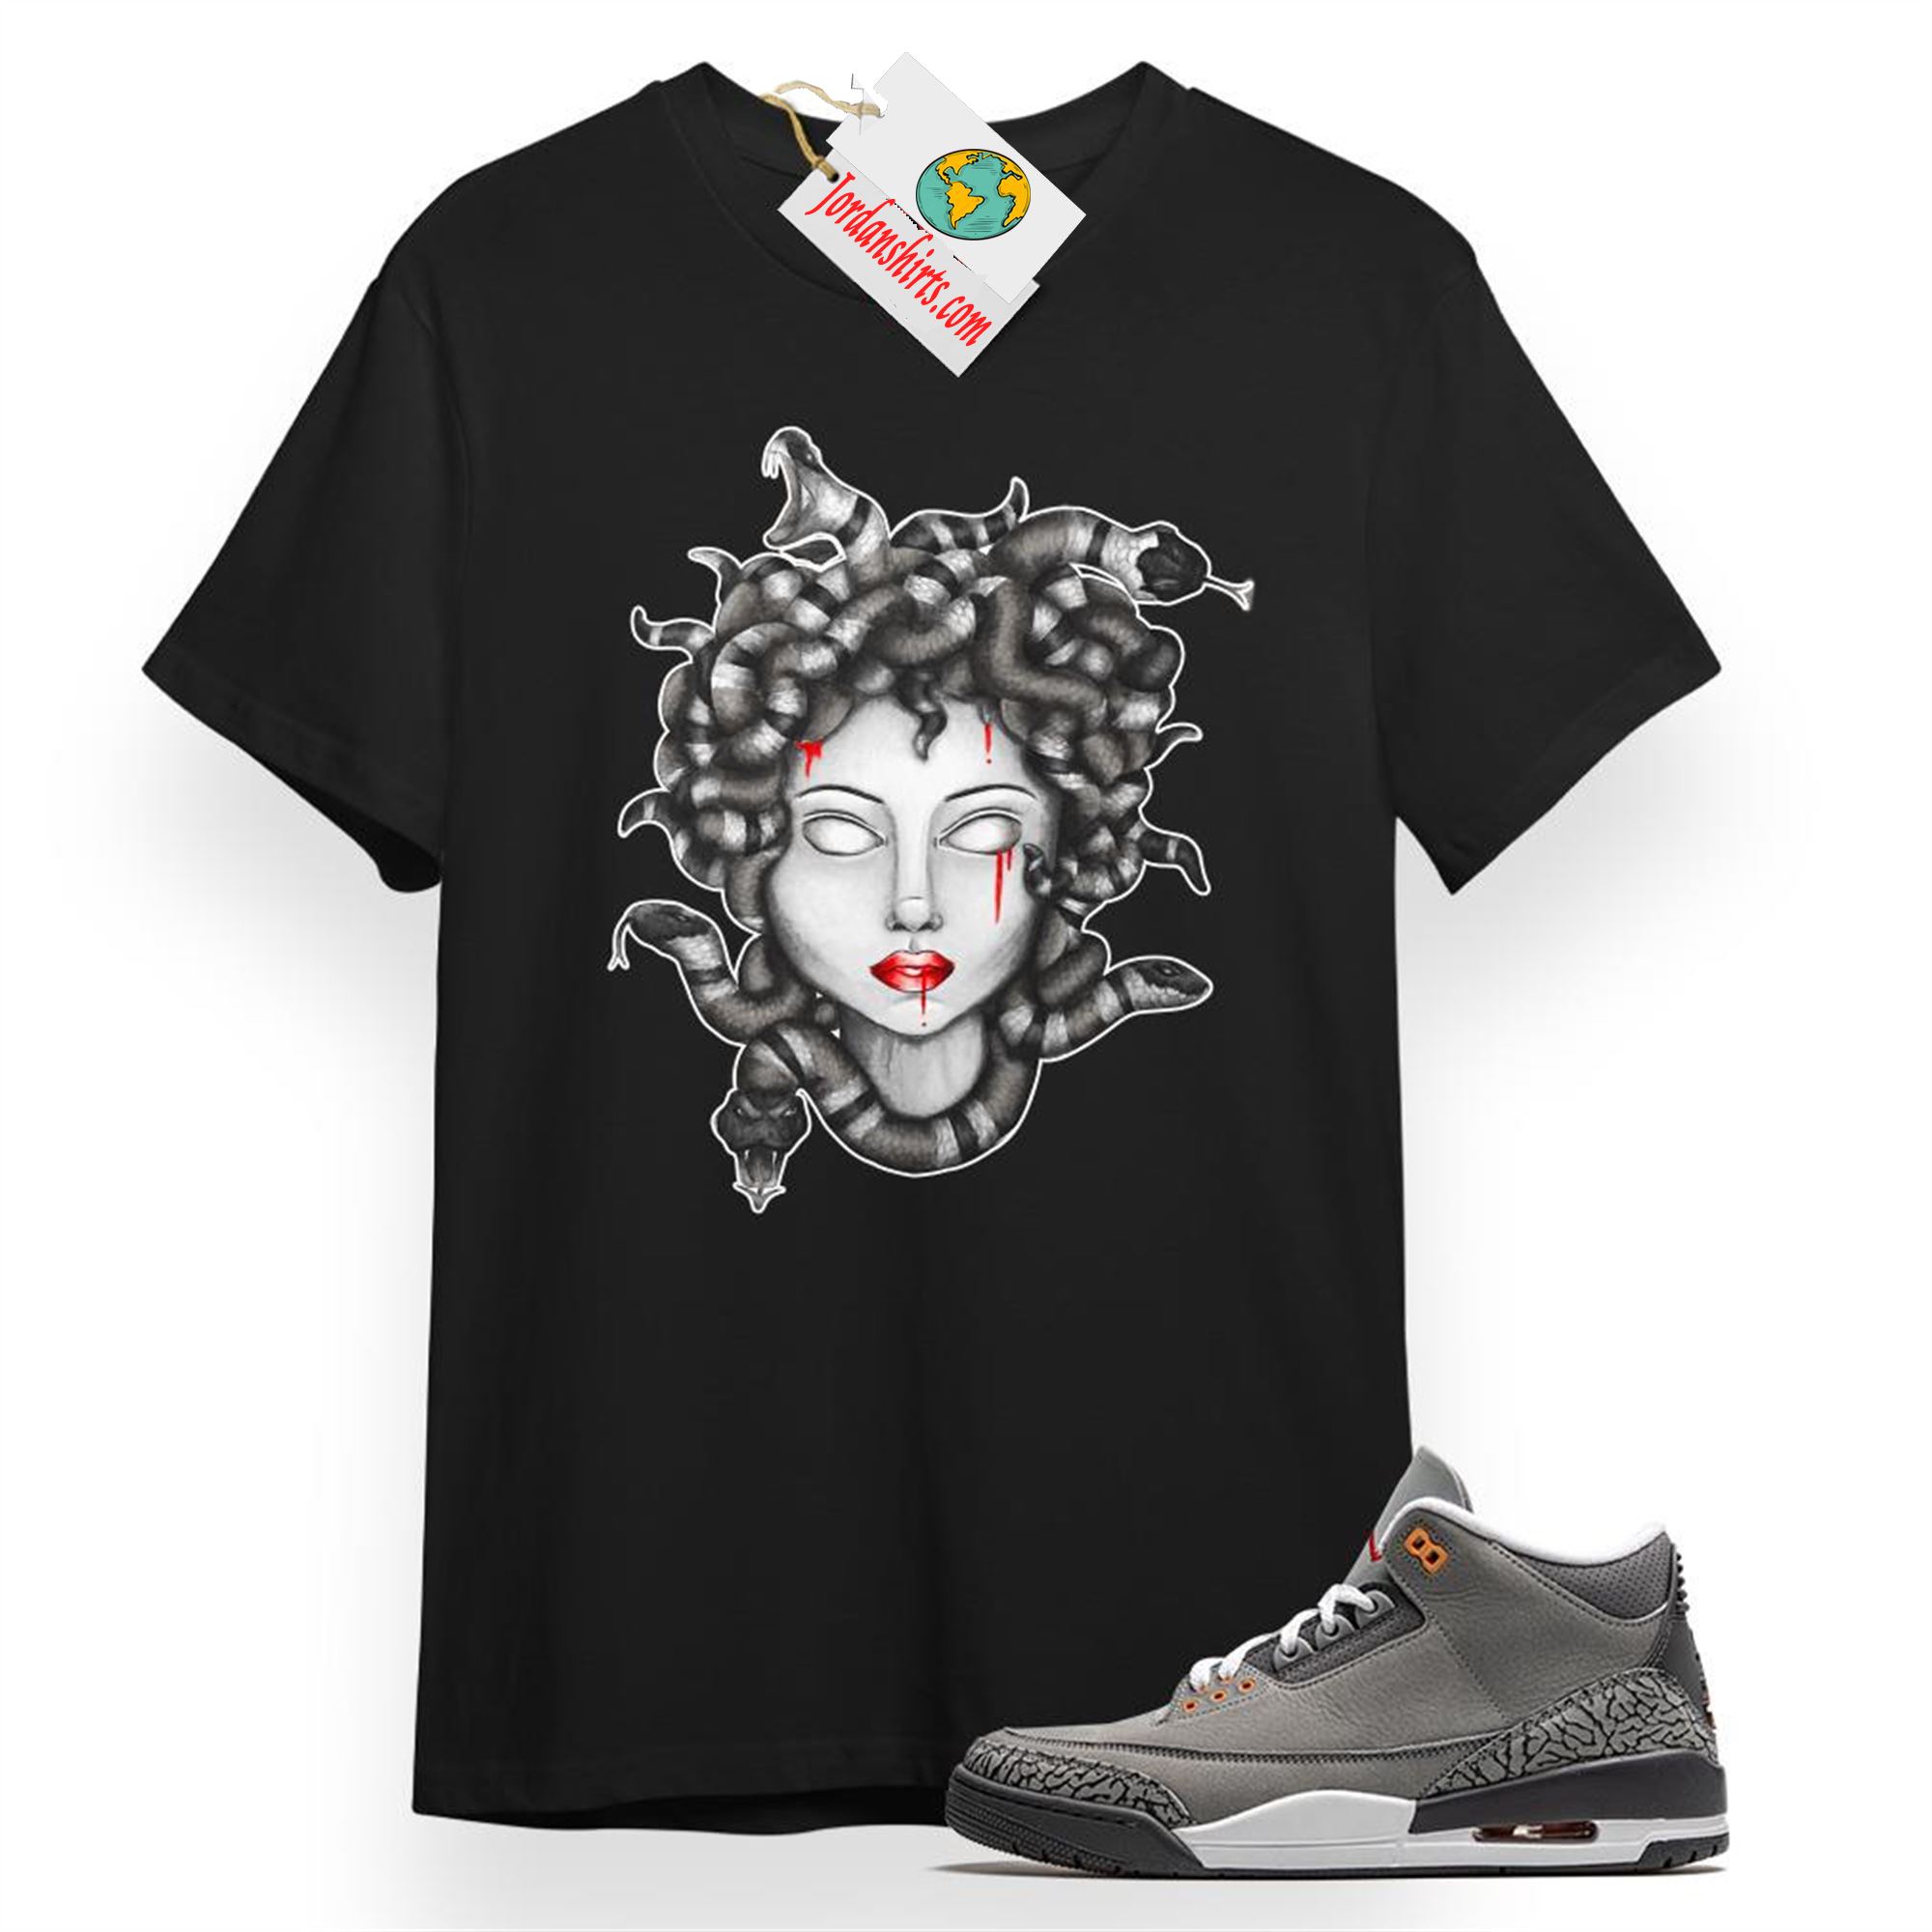 Jordan 3 Shirt, Medusa Snake Black T-shirt Air Jordan 3 Cool Grey 3s Size Up To 5xl